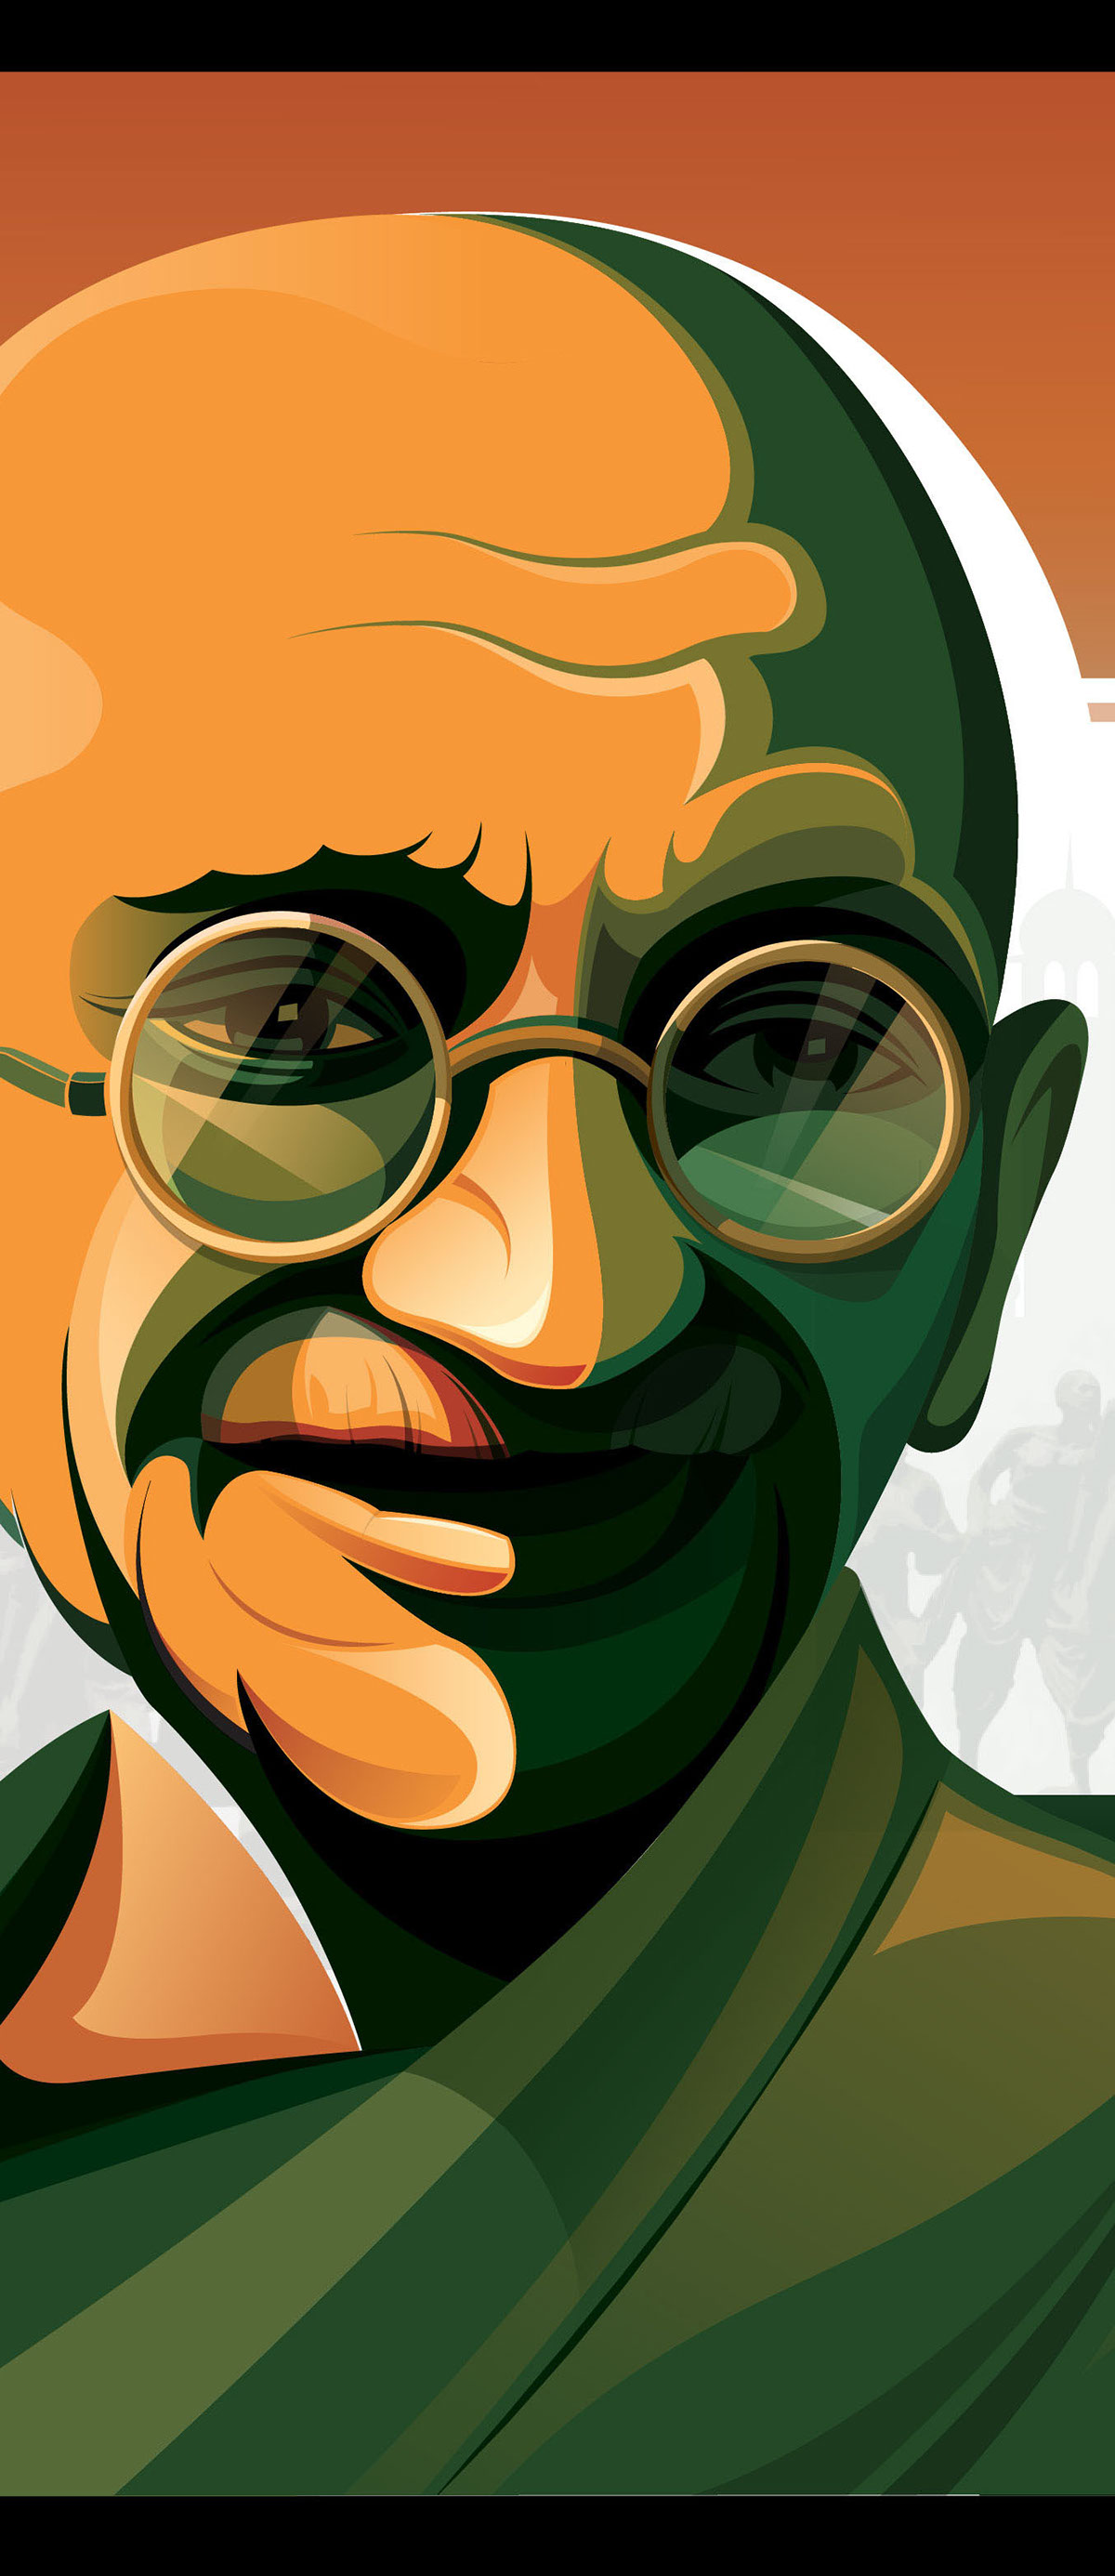 Stylized Portrait - Mahatma Gandhi on Behance